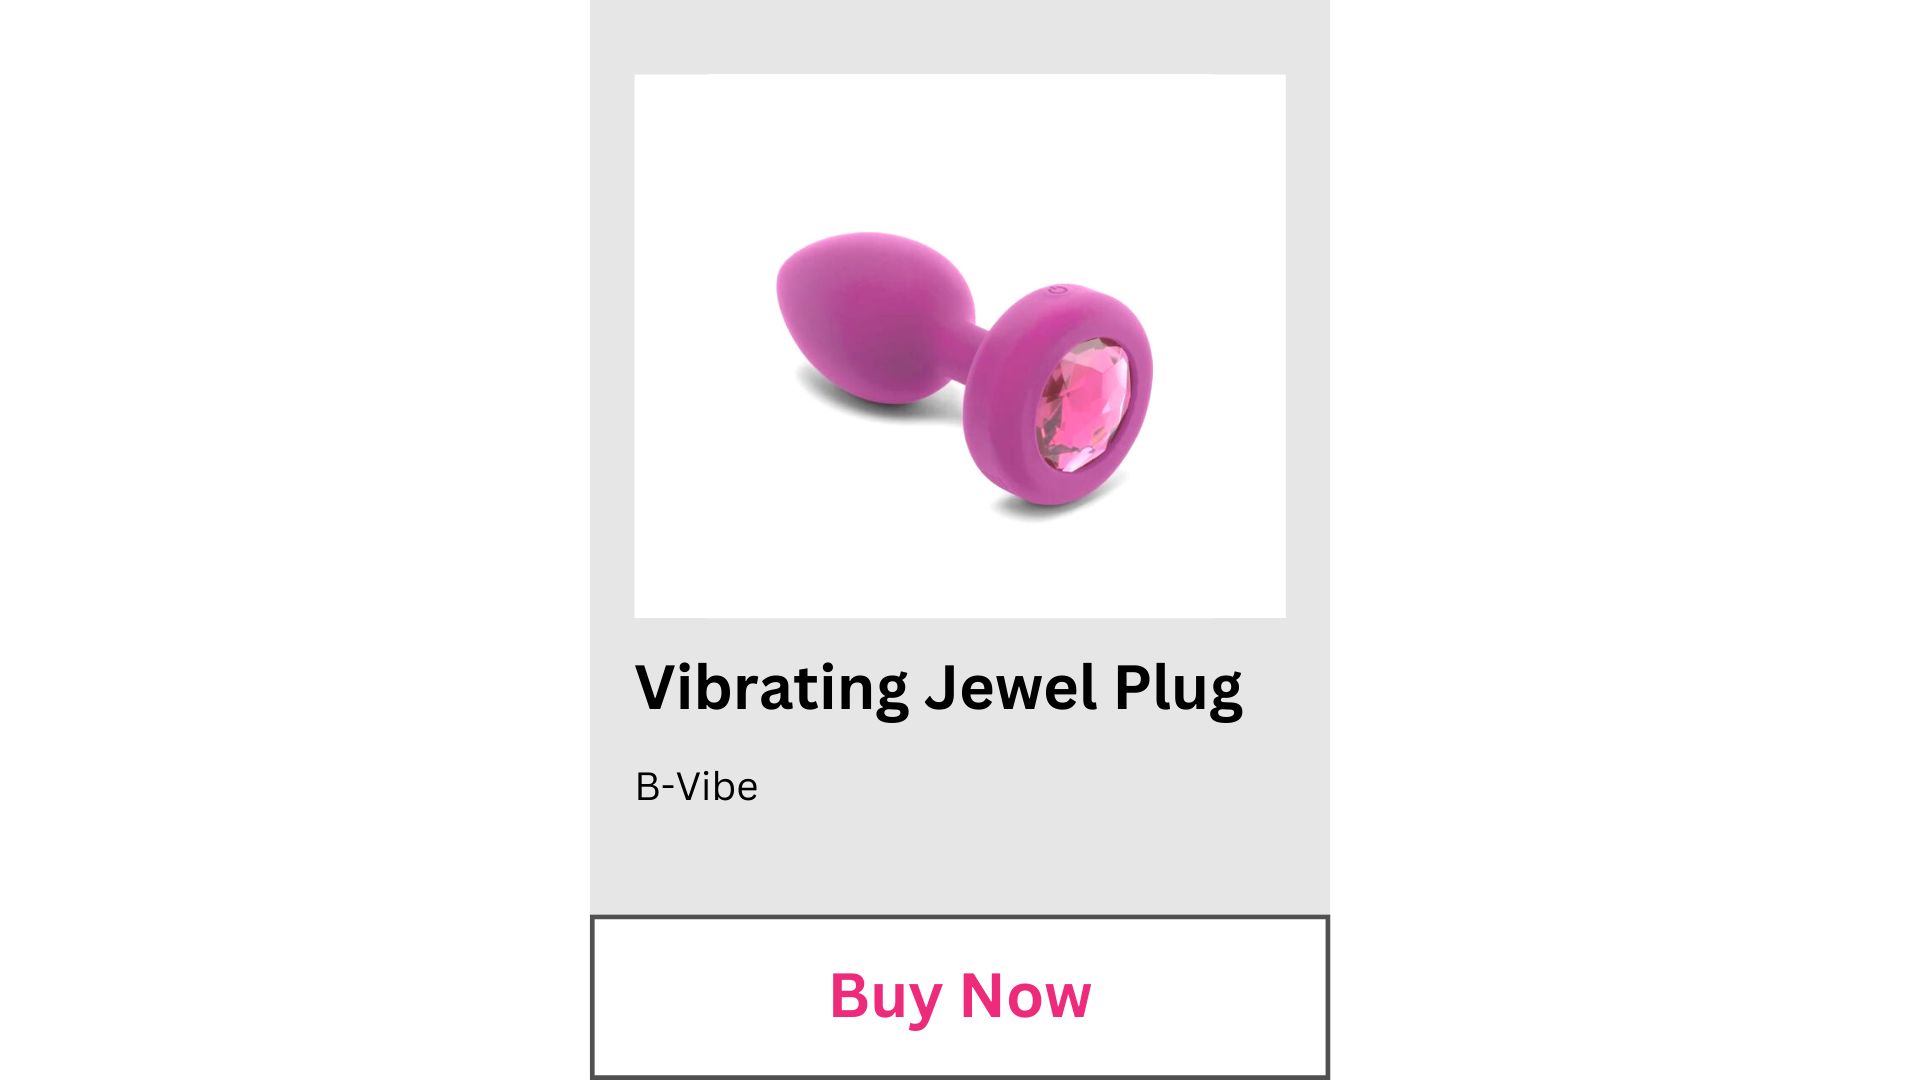 Buy the Vibrating Jewel Plug from B-Vibe.